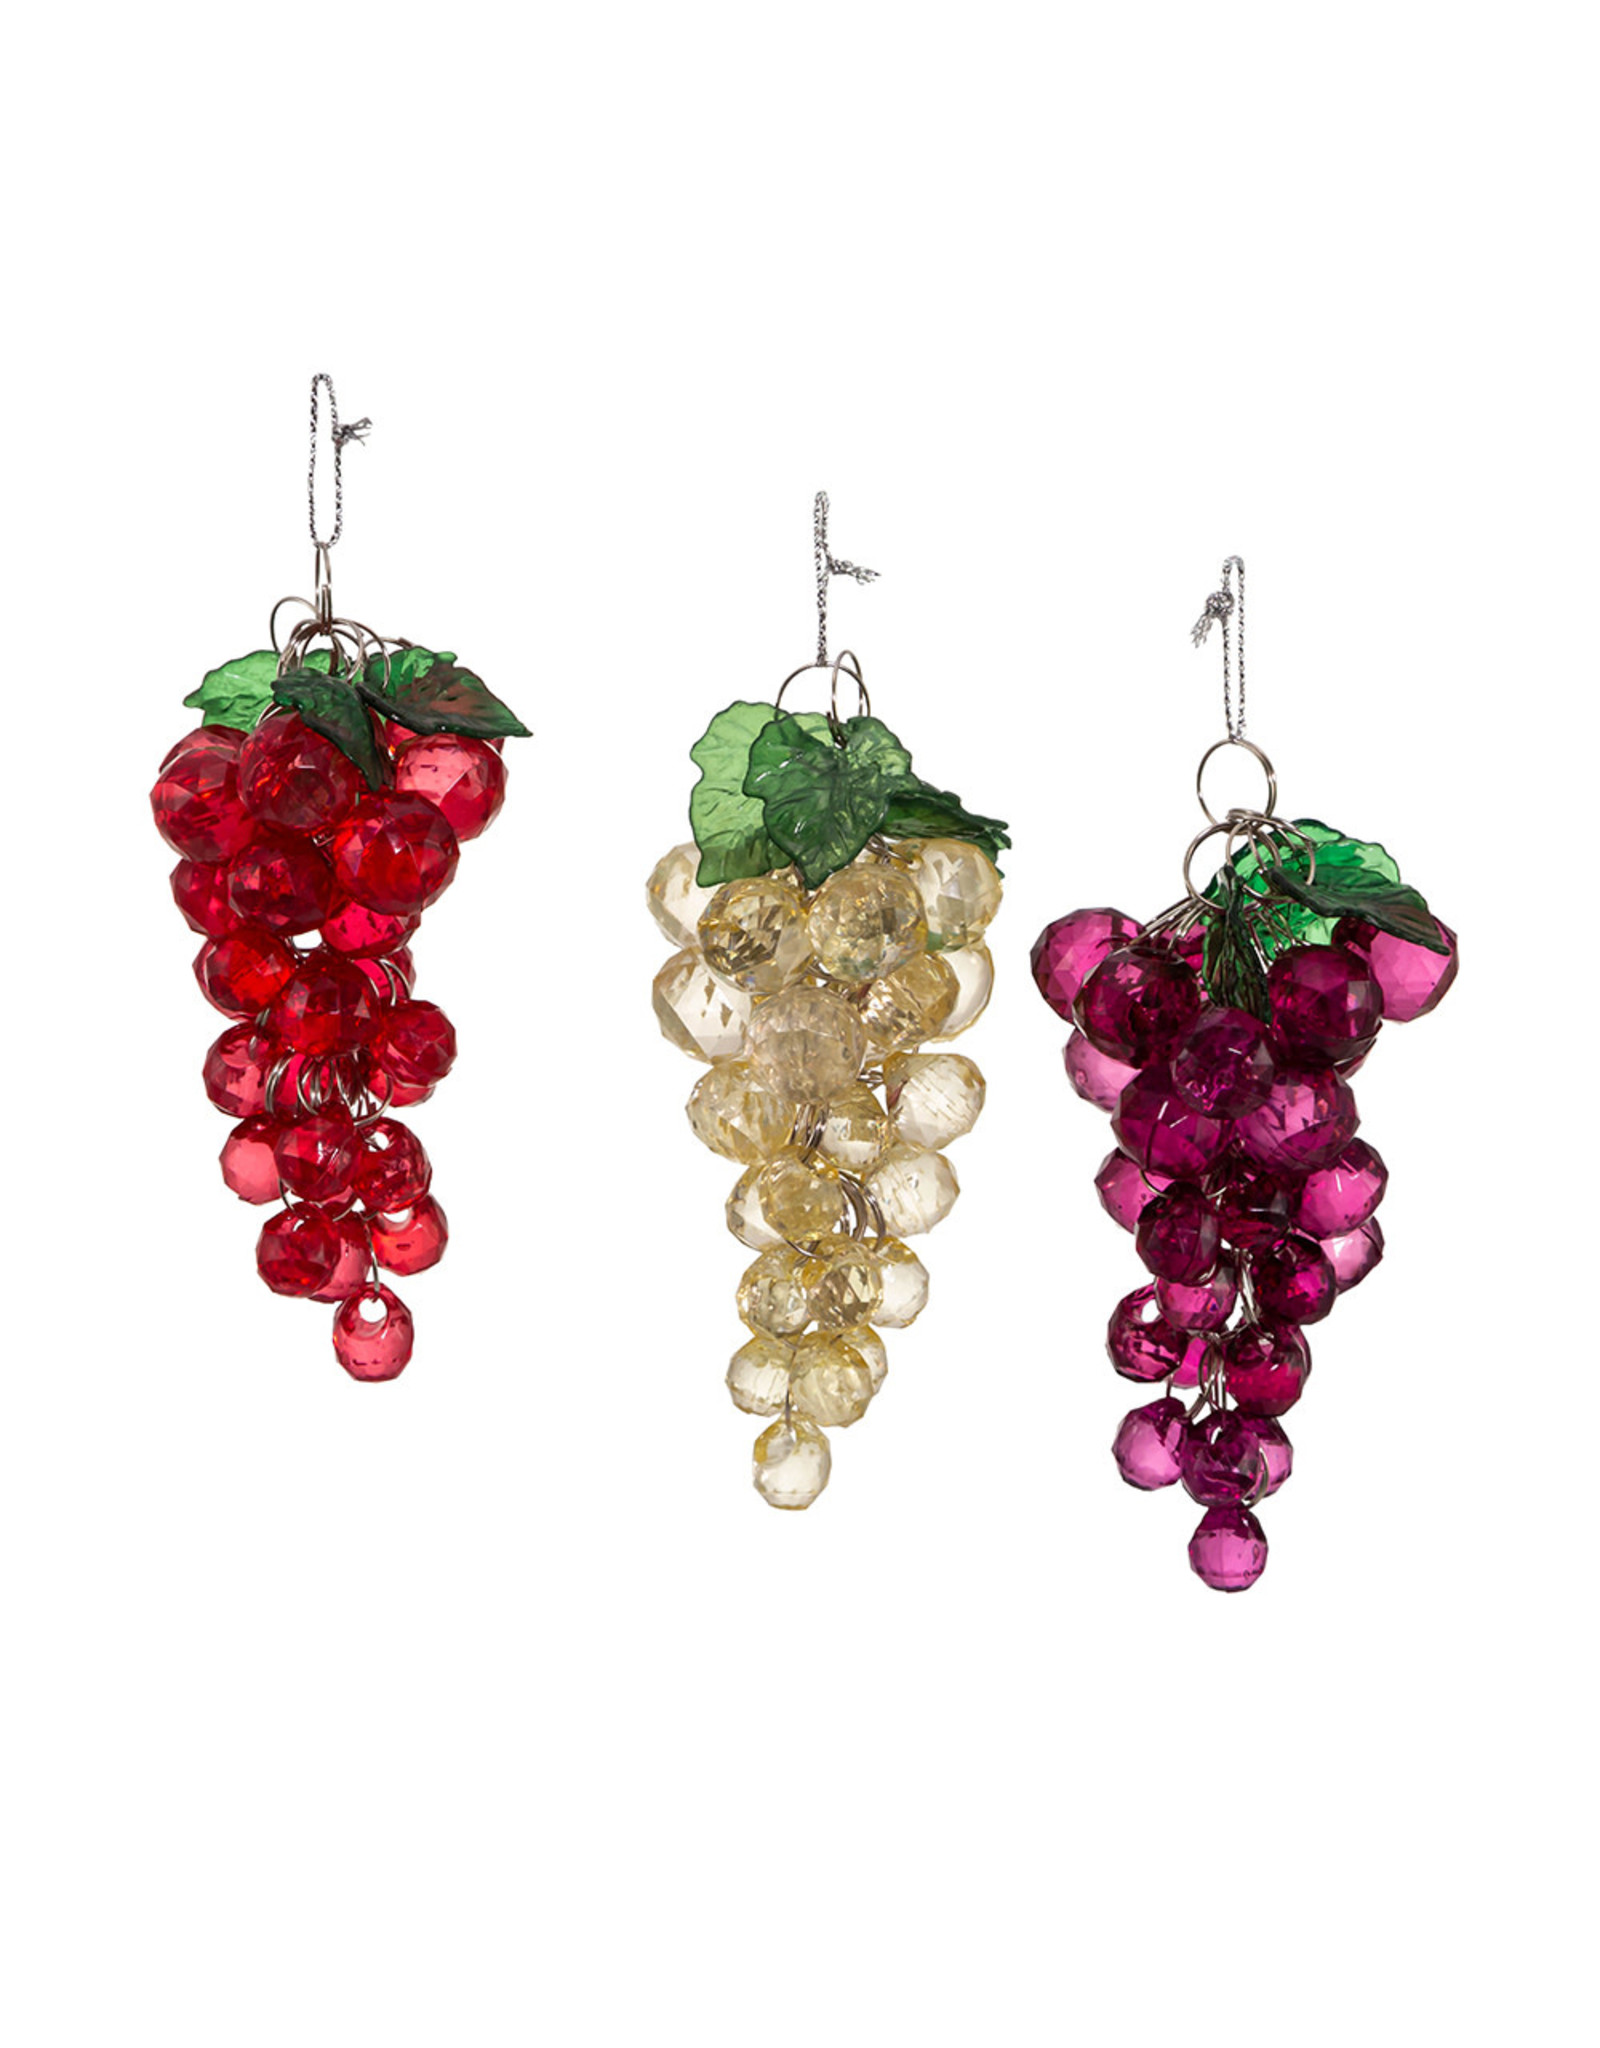 Kurt Adler Beaded Grape Ornaments 3 Assorted